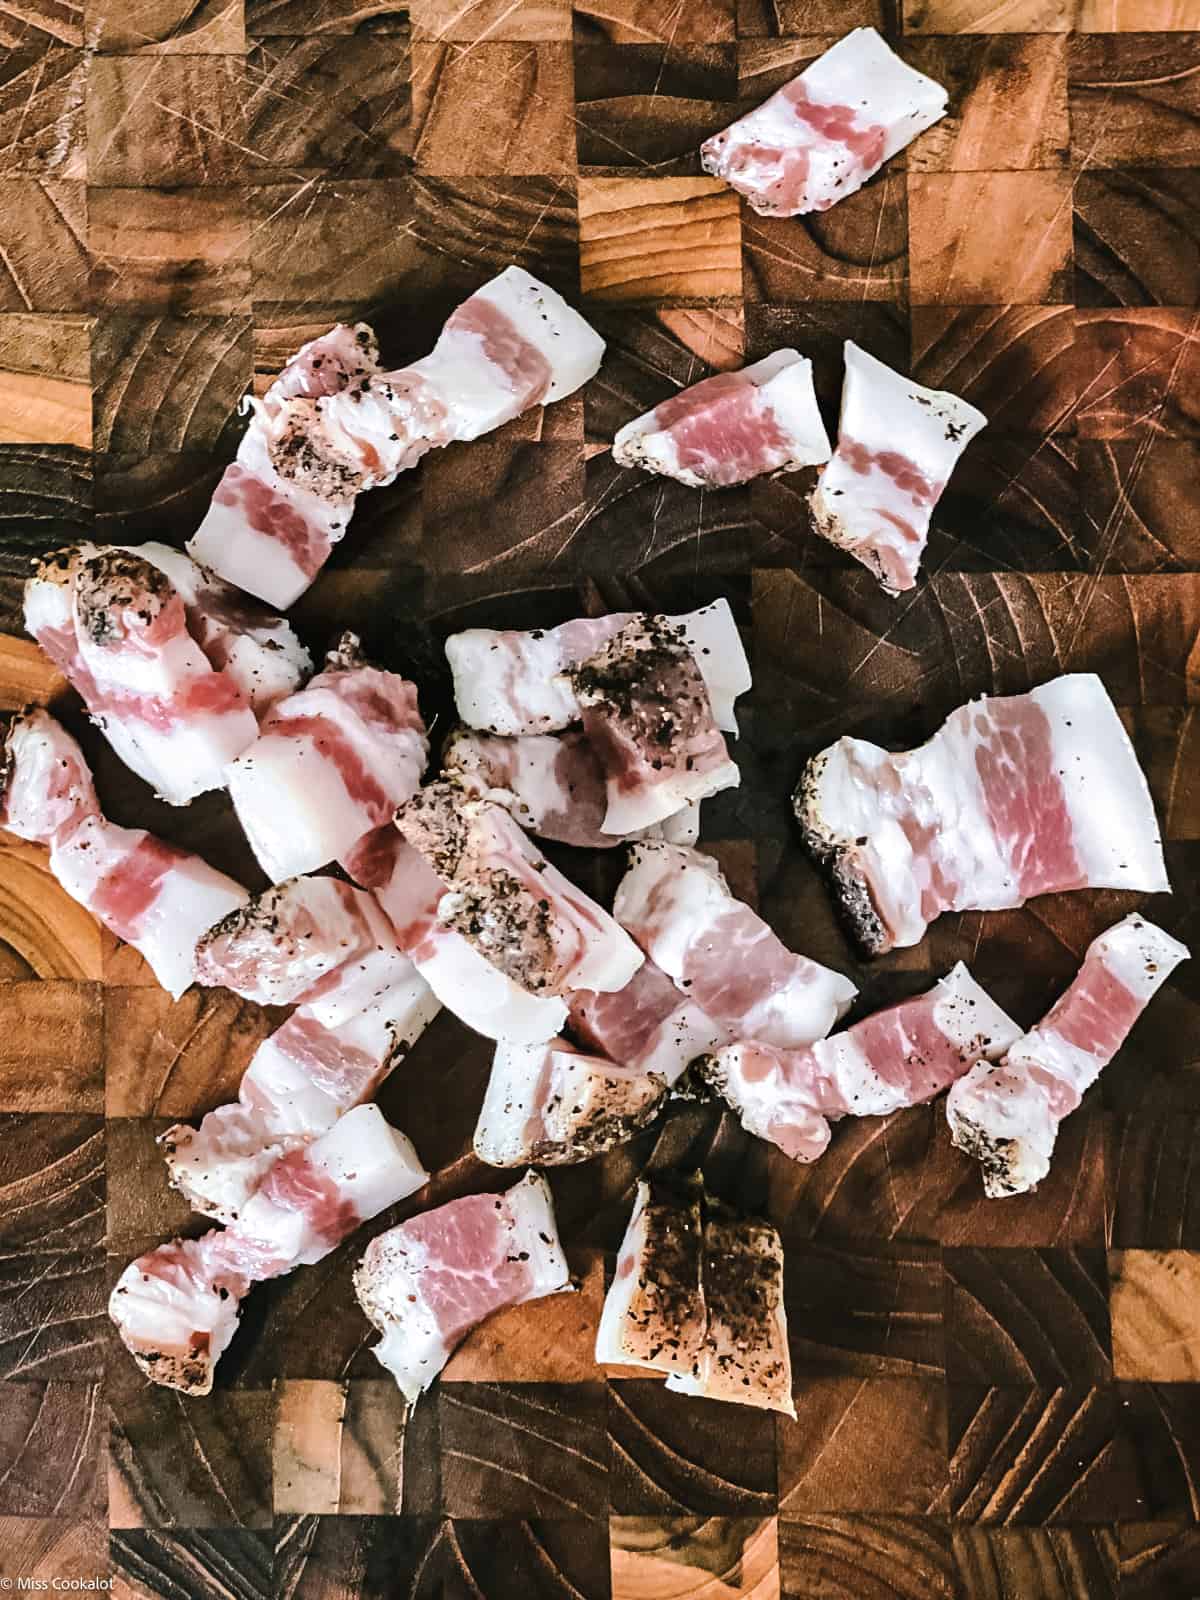 Gunchiale cut in bite size pieces on a butcher block.